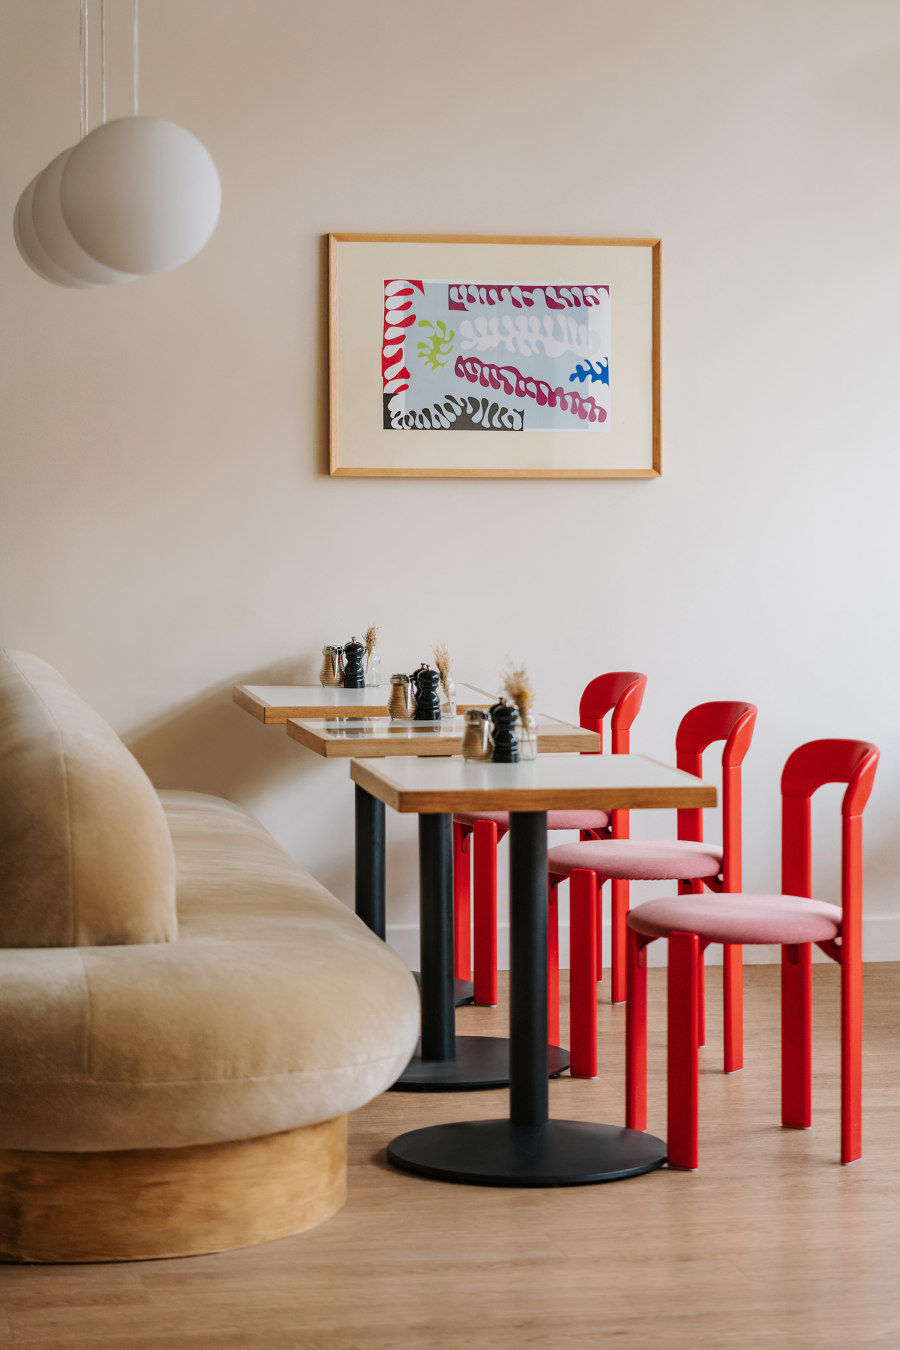 Beam Cafe di Ola Jachymiak Studio | Caffetterie - Interni